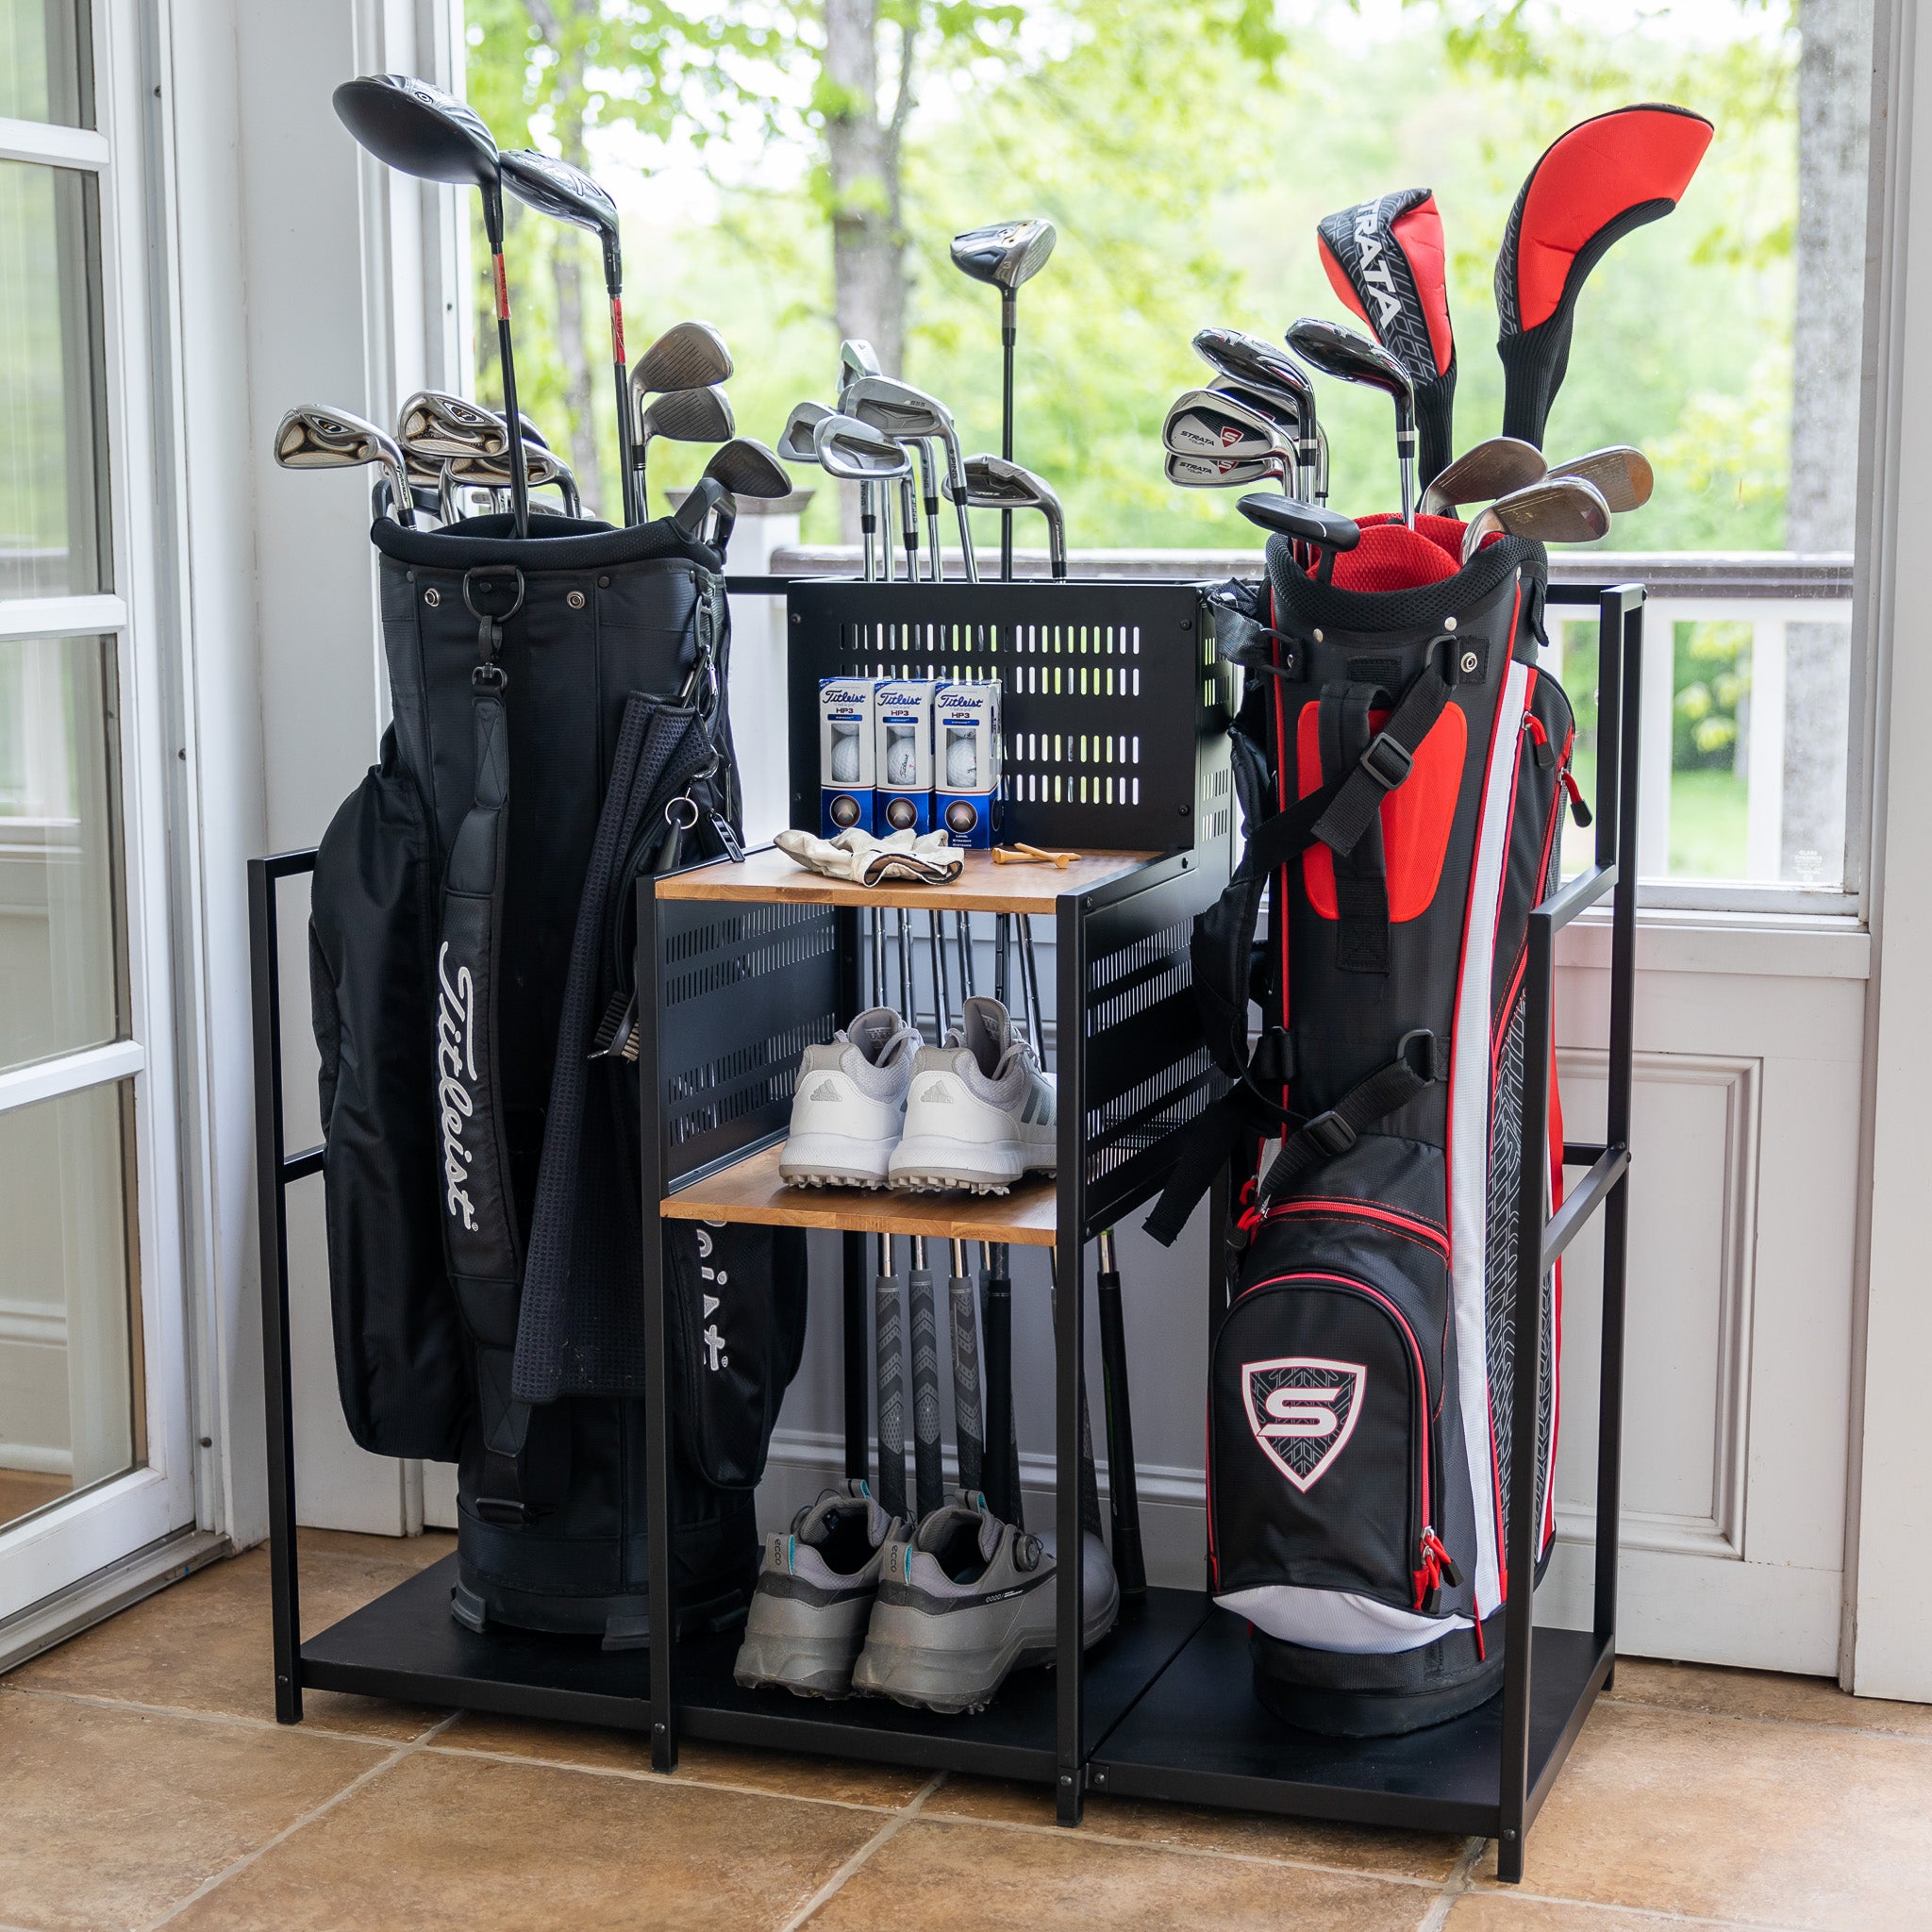 F-Series Golf Organizer Garage - Golf Bag Storage - Stand Holds 2 Bags,  Clubs and Accessories - Freestanding Rack - Garage Organization – Teal  Triangle